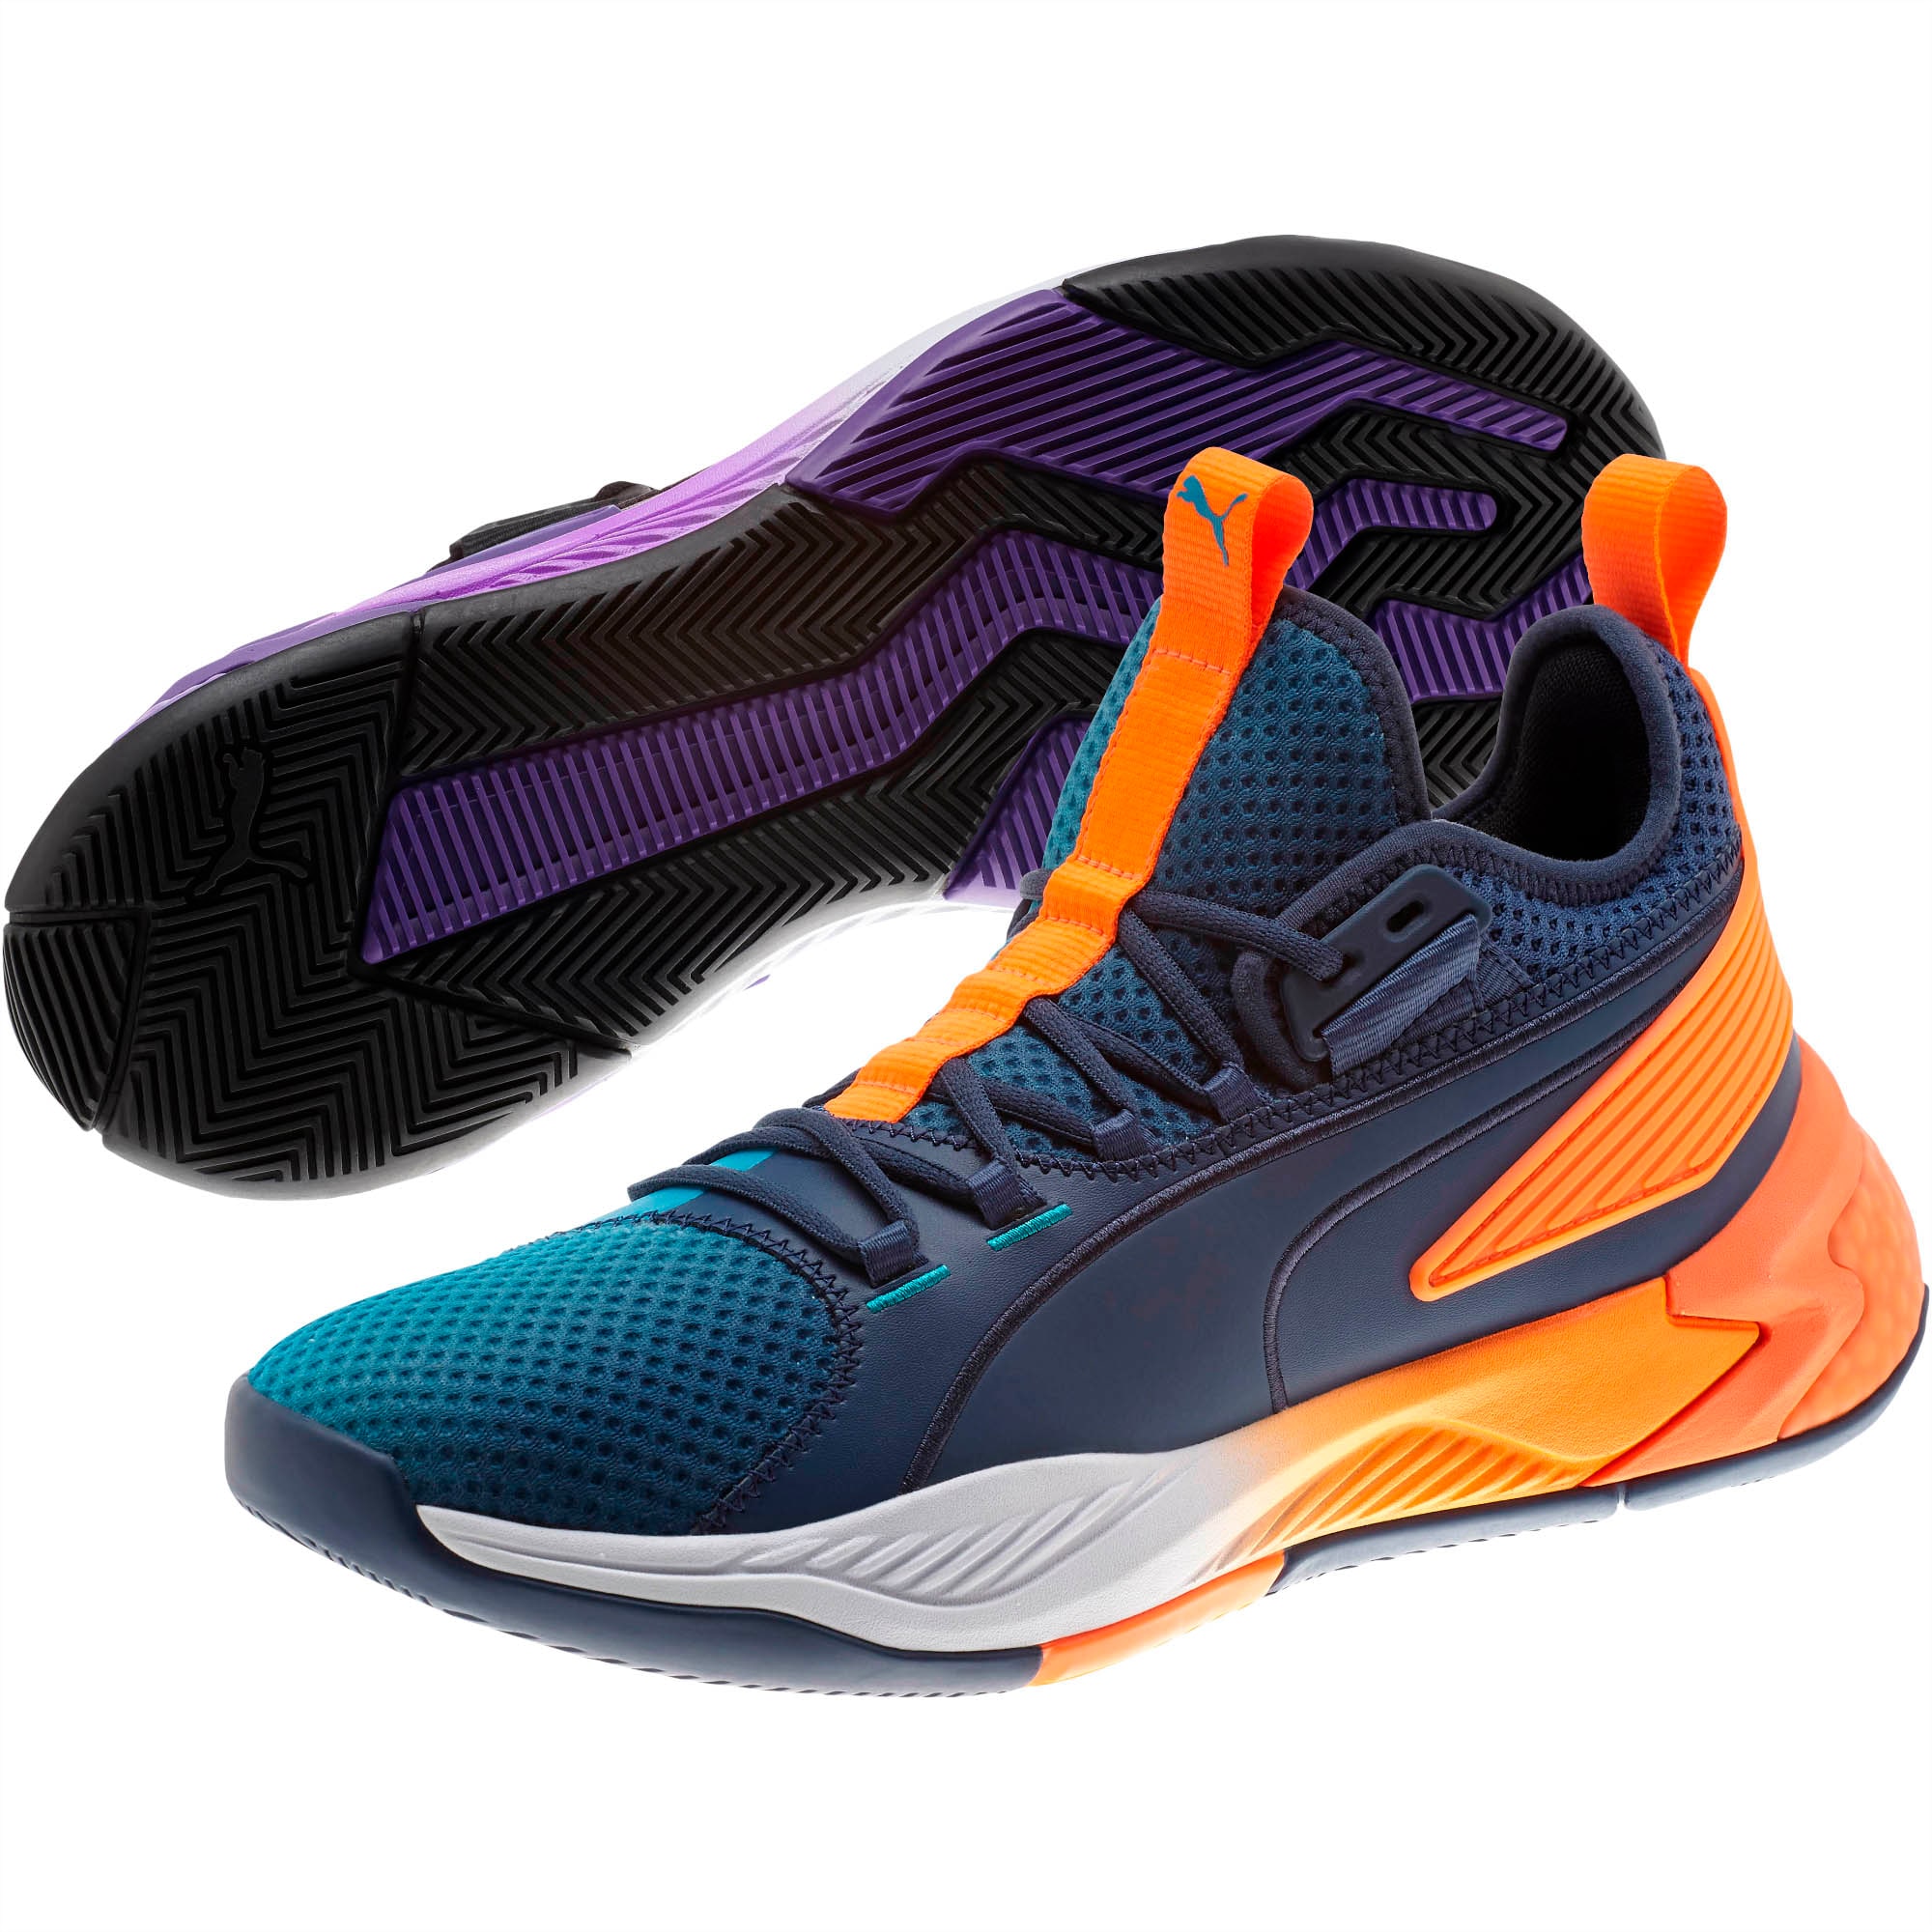 puma orange basketball shoes OFF 60%